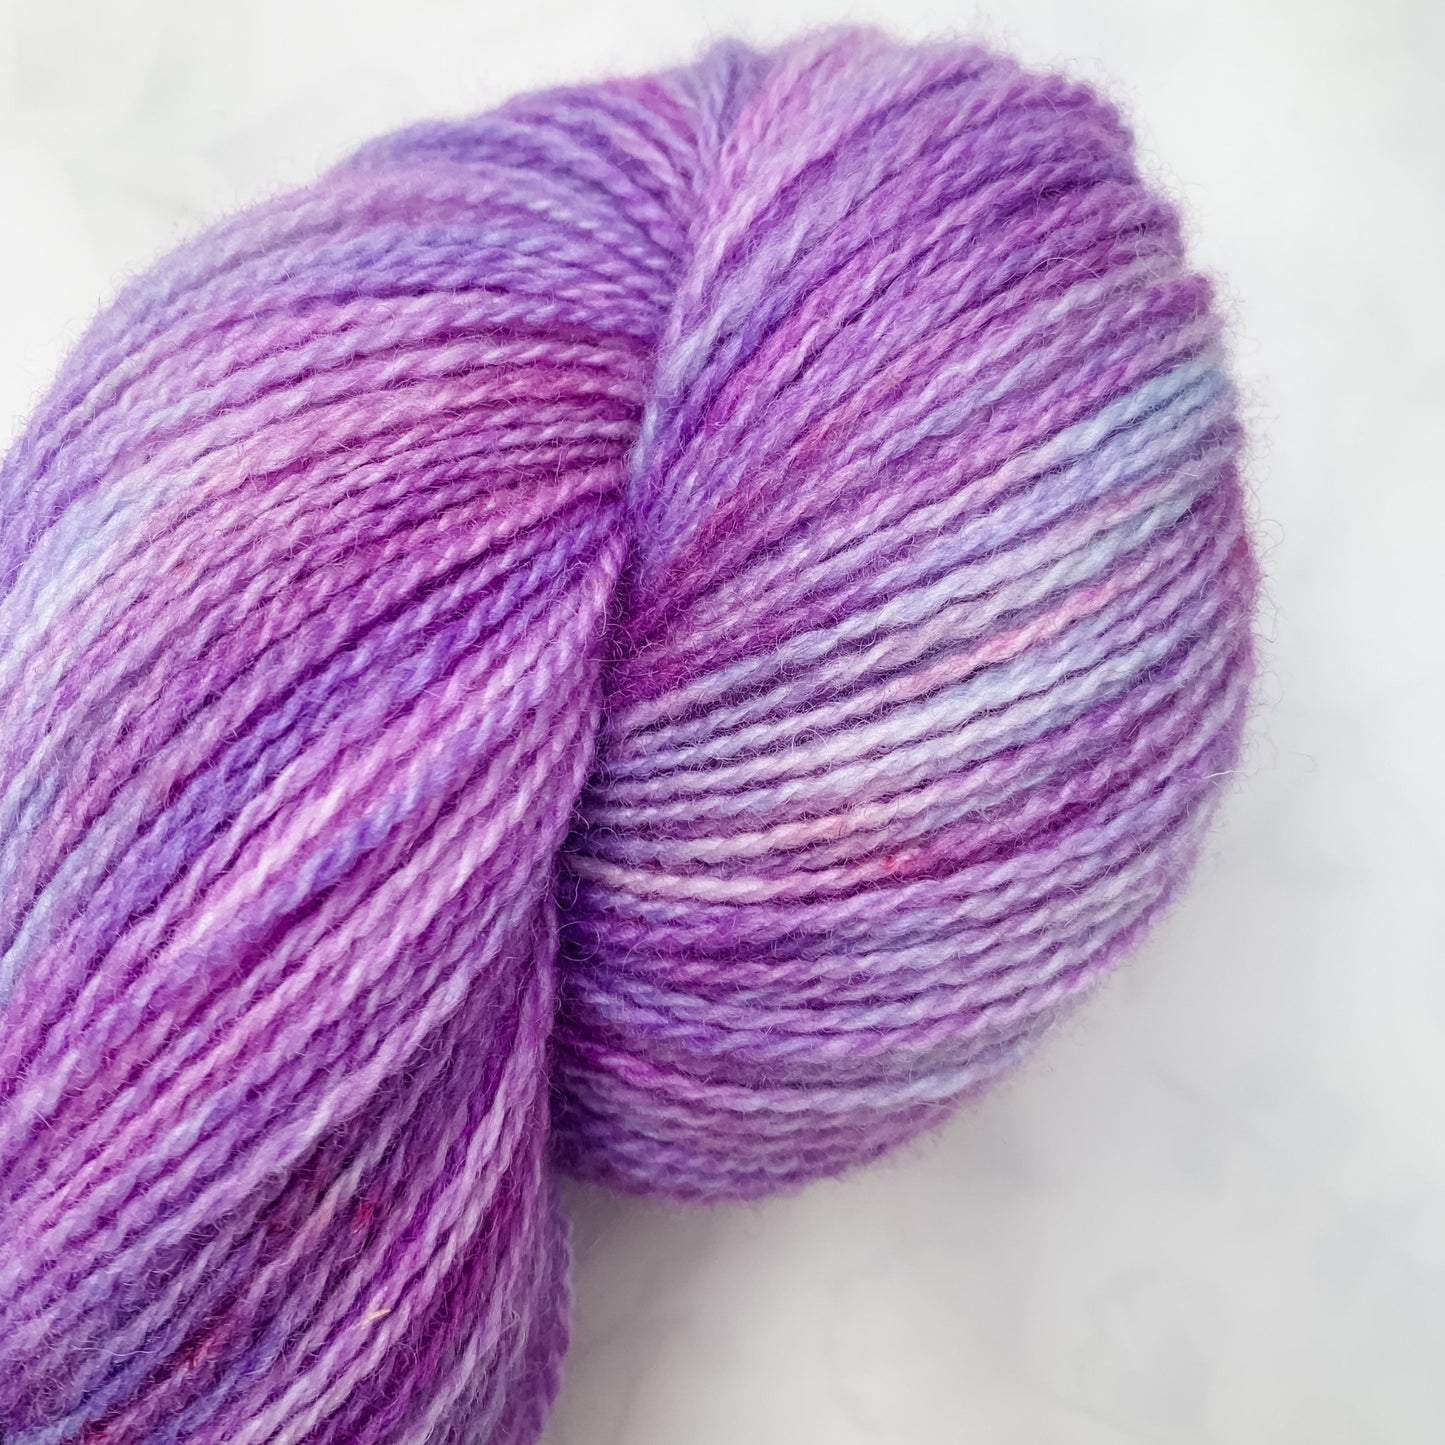 Lilac fields - Trollfjord sock - Variegated Yarn - Hand dyed yarn